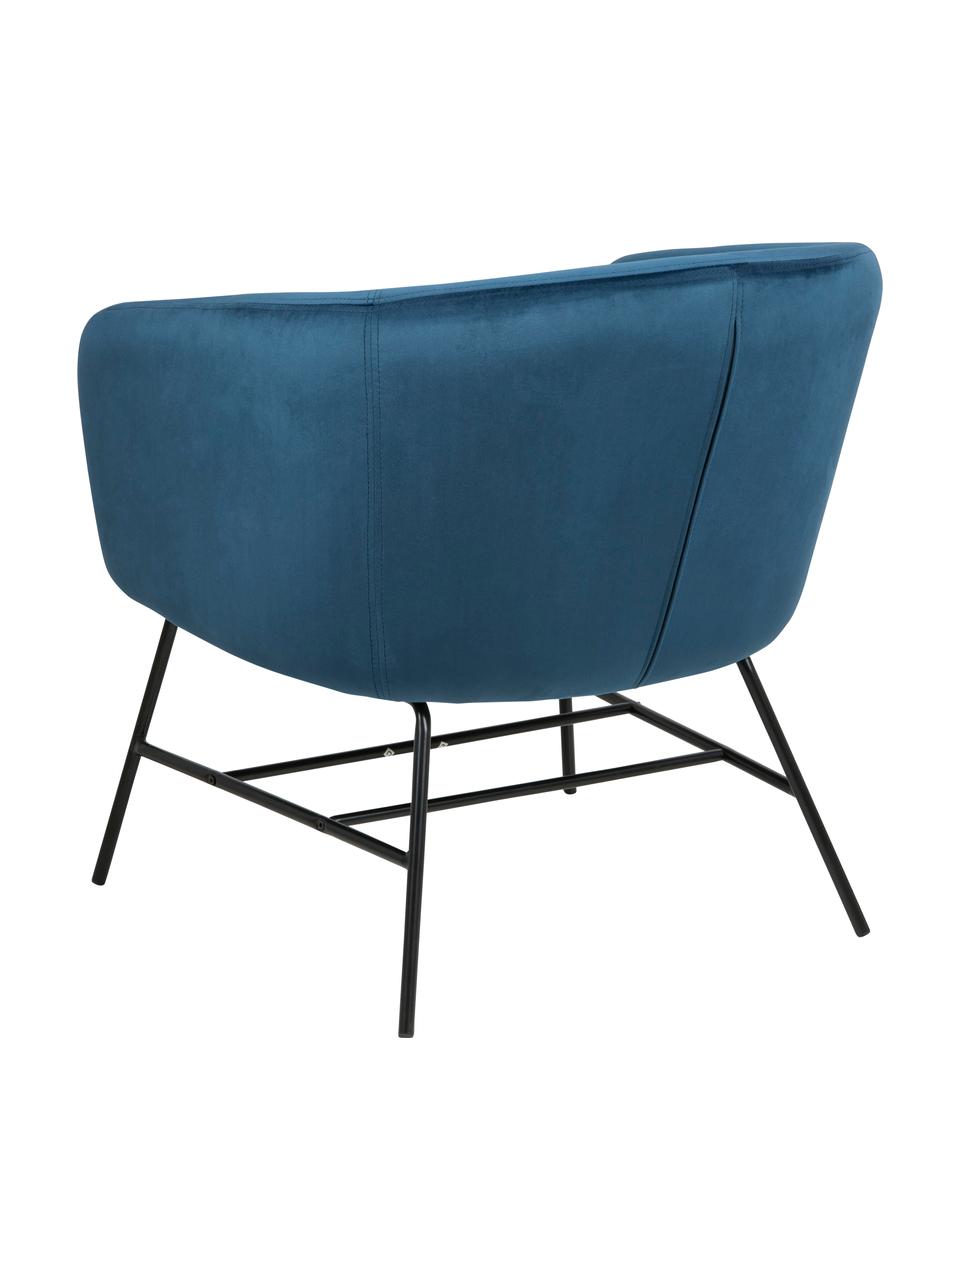 Moderne fluwelen fauteuil Ramsey in blauw, Bekleding: polyester fluweel, Poten: gelakt metaal, Fluweel marineblauw, B 72 x D 67 cm